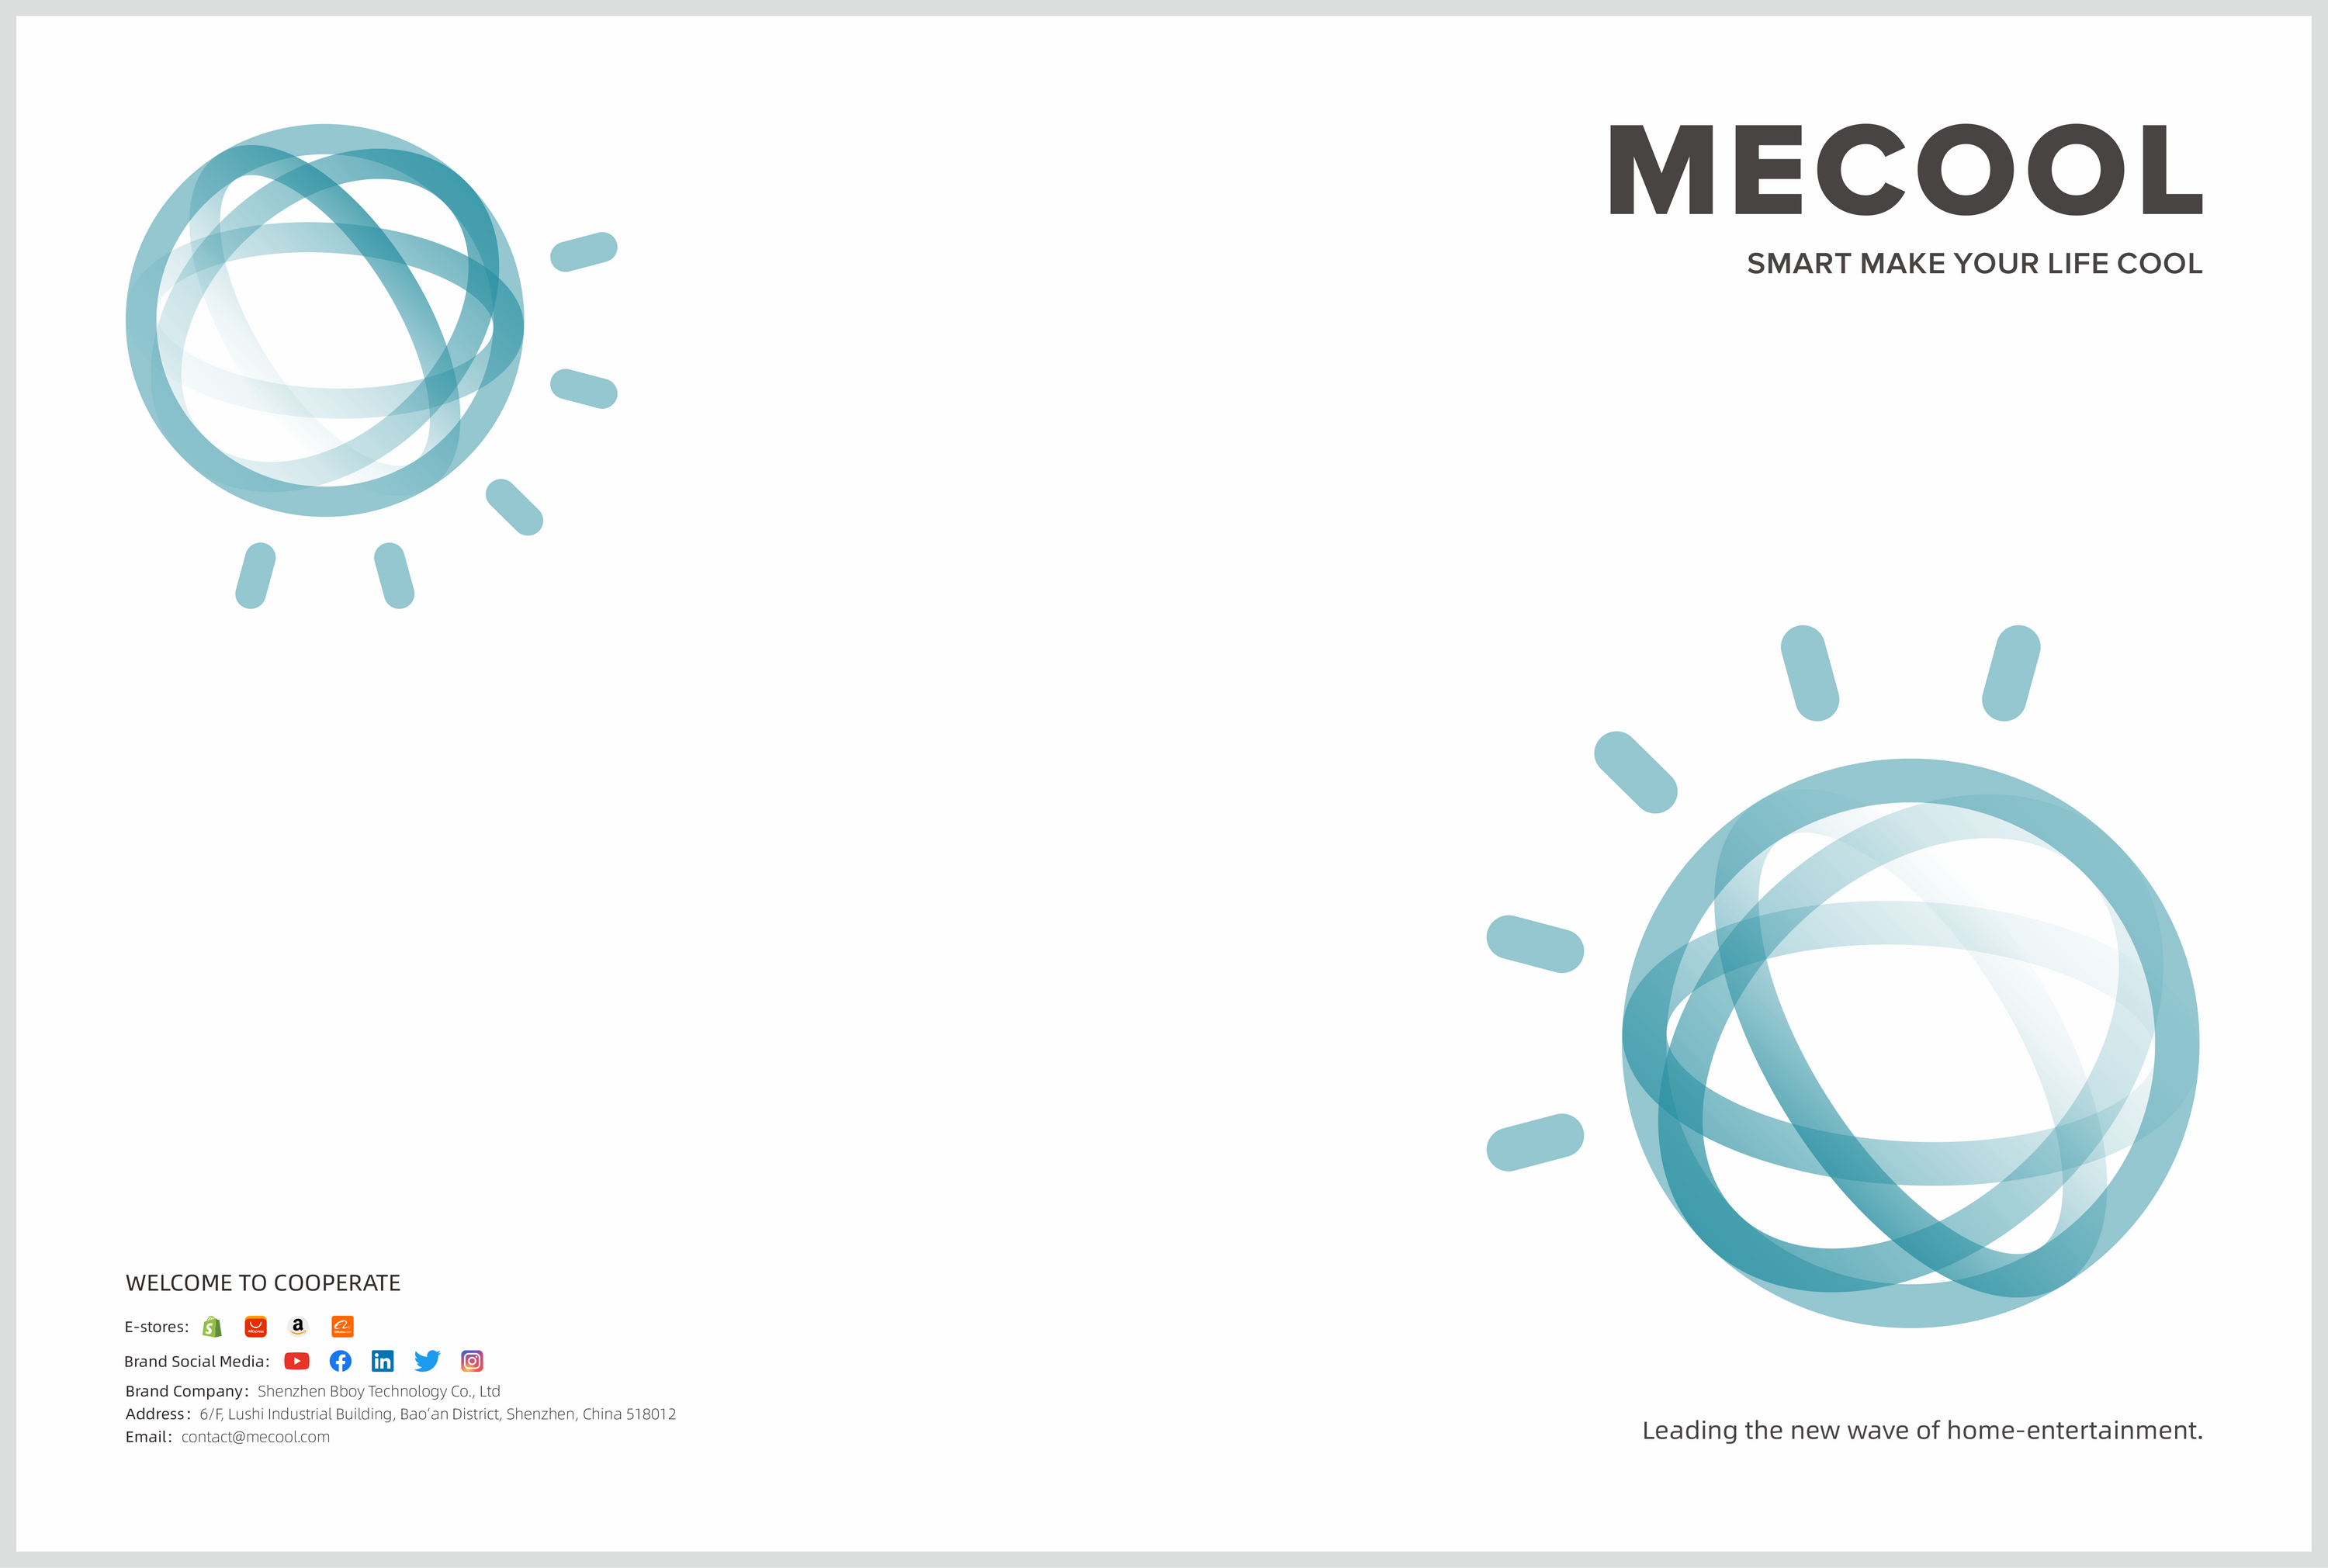 MECOOL promotional brochure